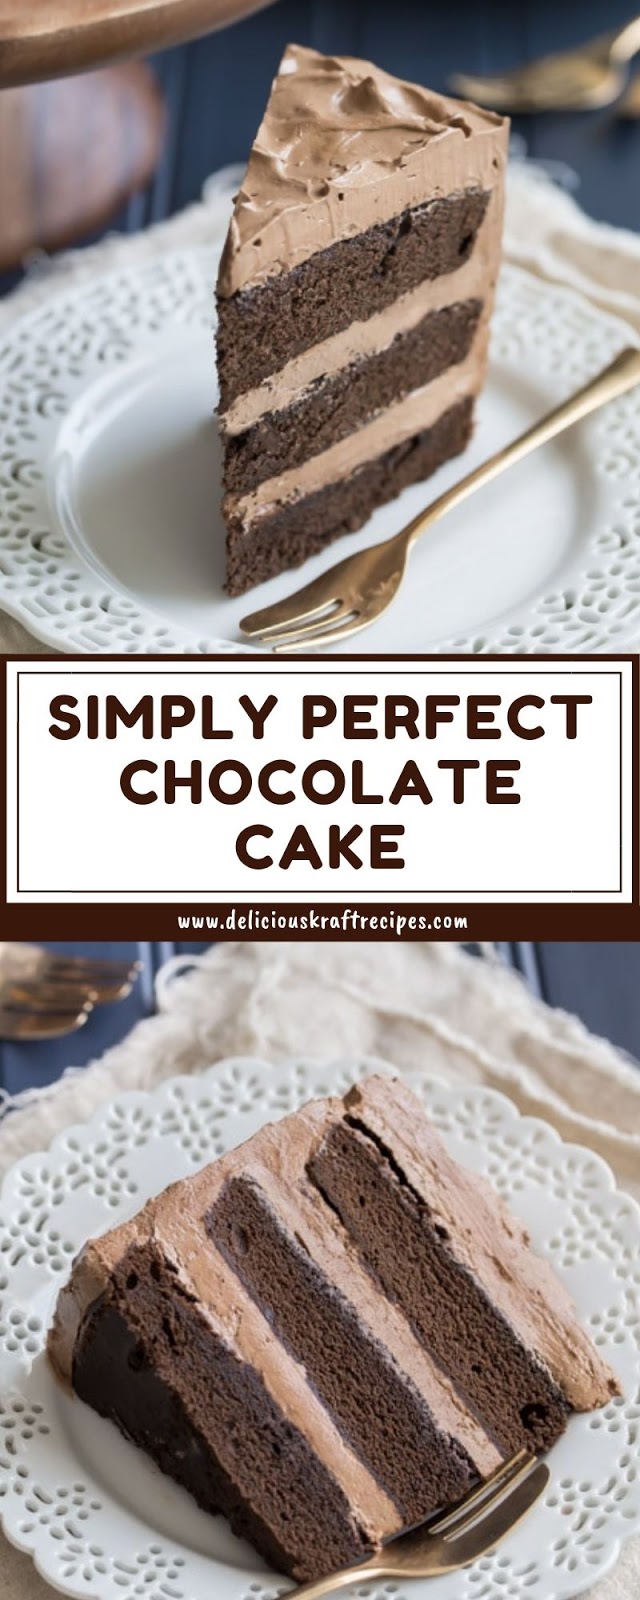 SIMPLY PERFECT CHOCOLATE CAKE